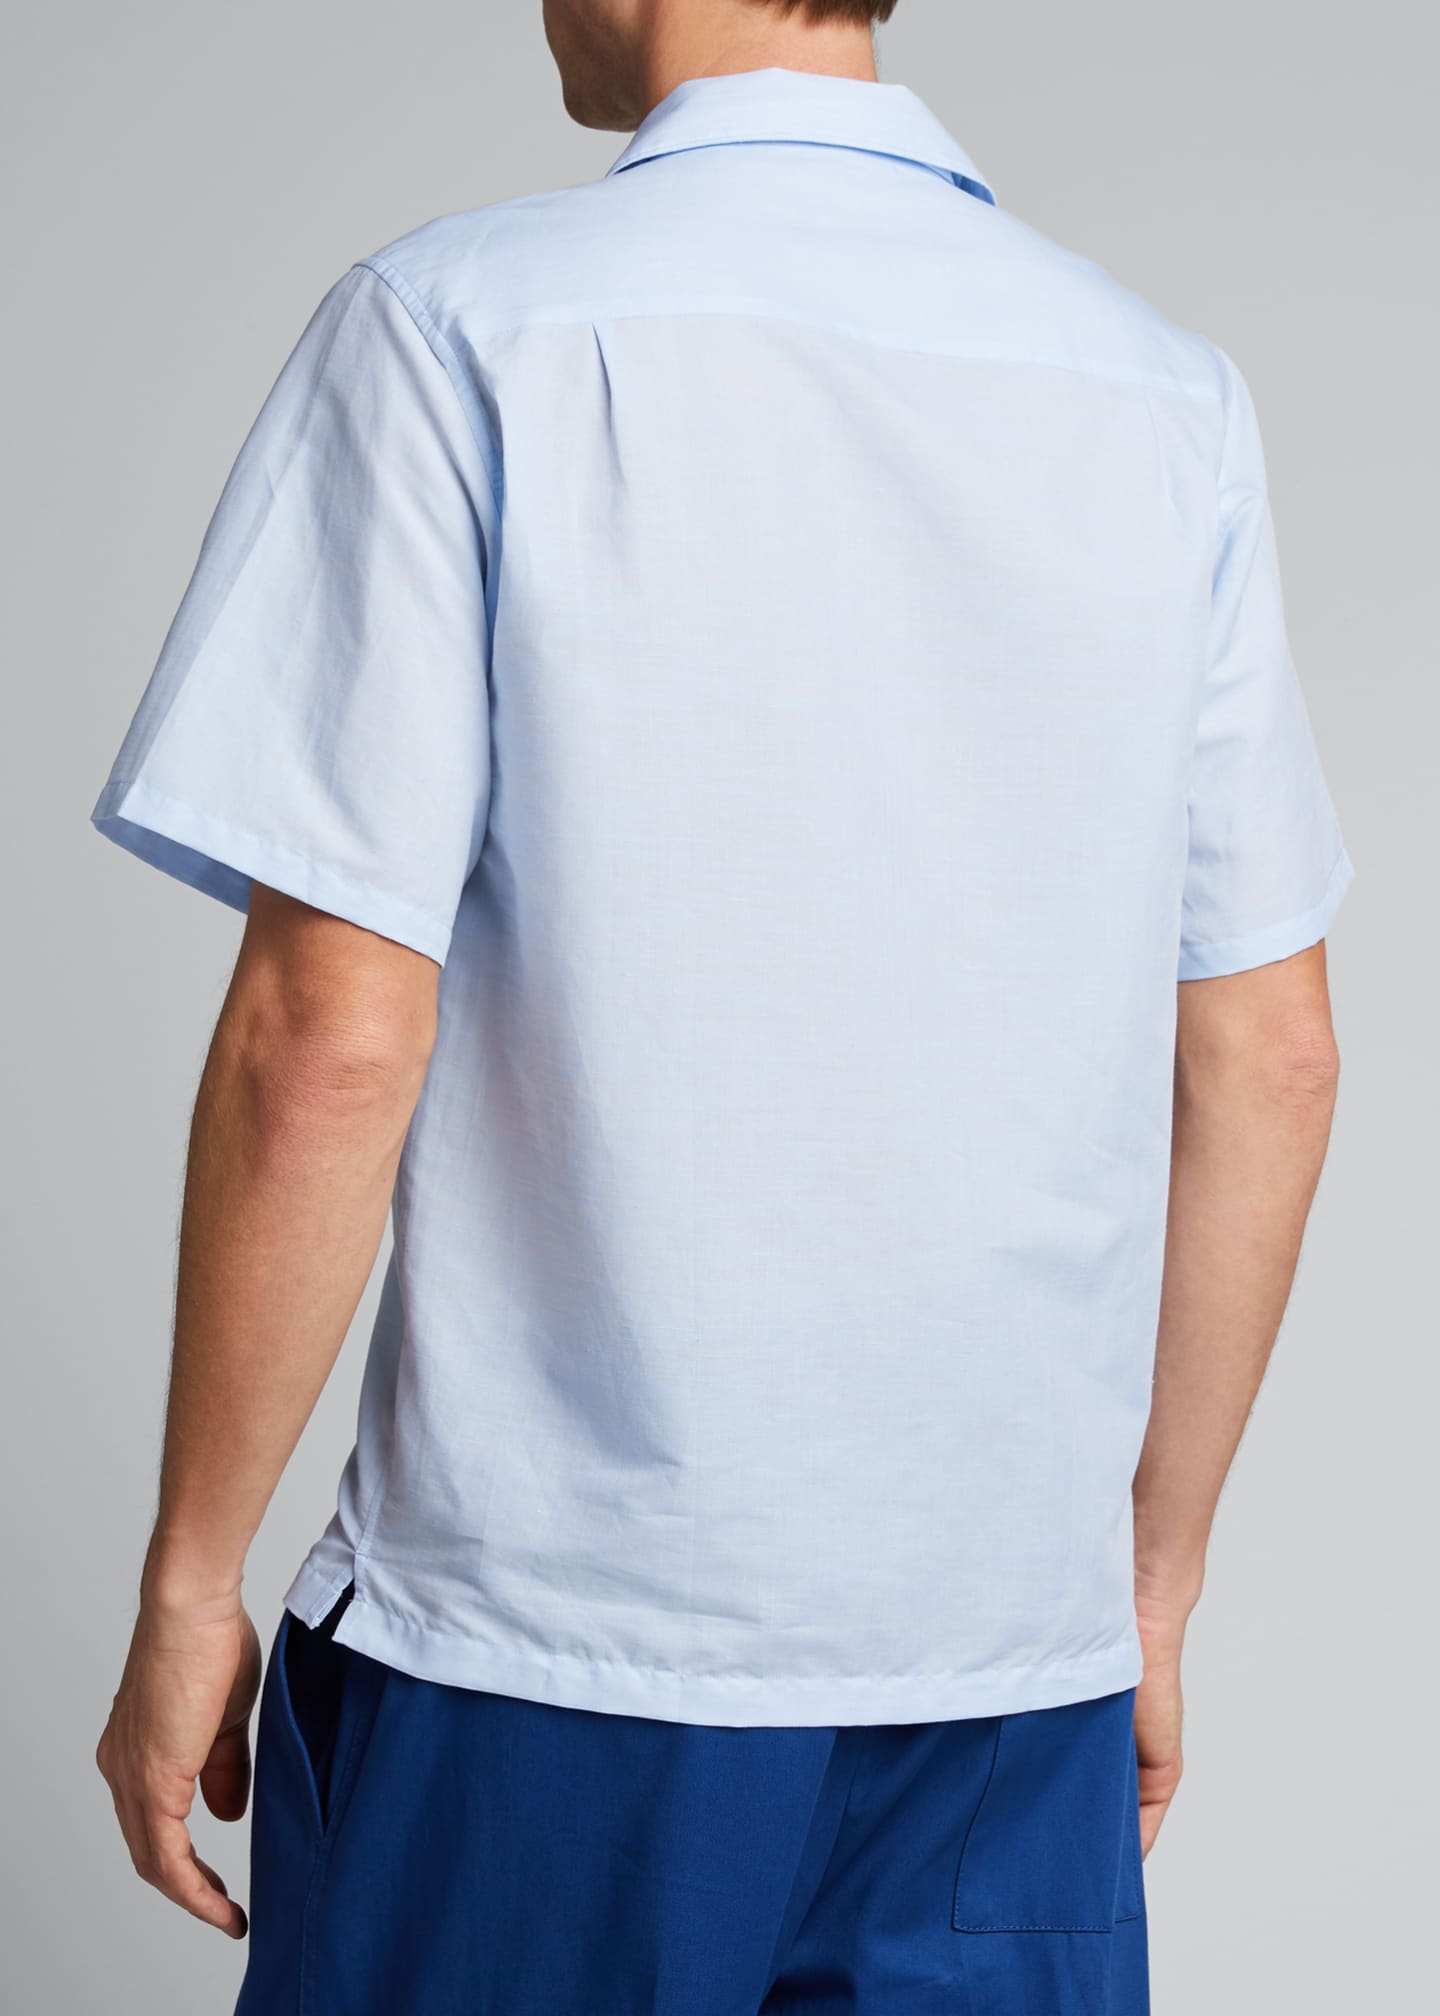 Kenzo Men's Linen-Cotton Camp Shirt w/ Pocket - Bergdorf Goodman